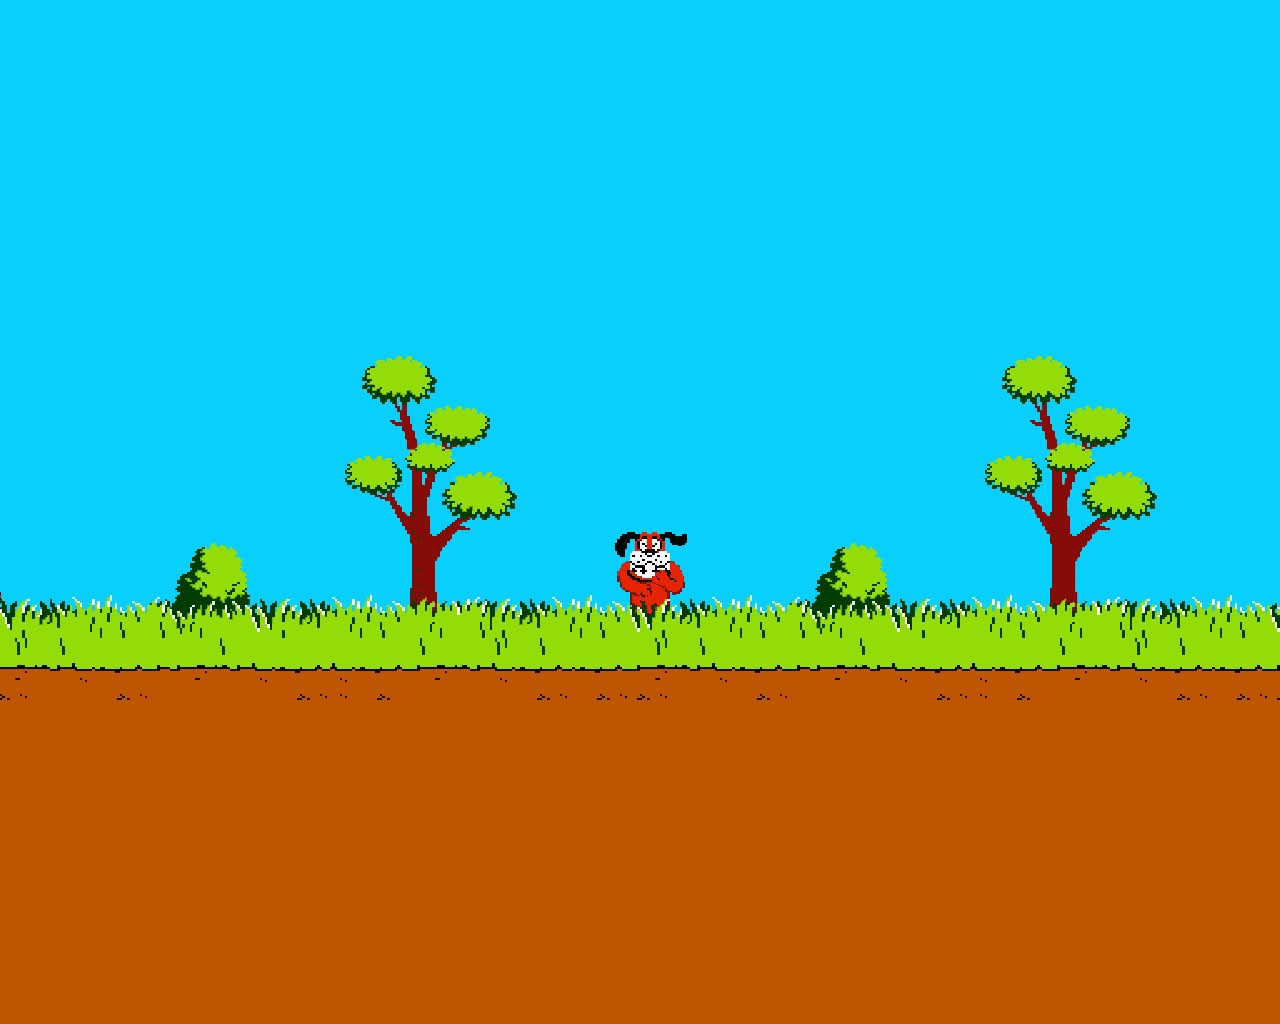 Nintendo Duck Hunt Dog Trees Pixel Art Pixelated Nintendo Entertainment System Laughing 1280x1024